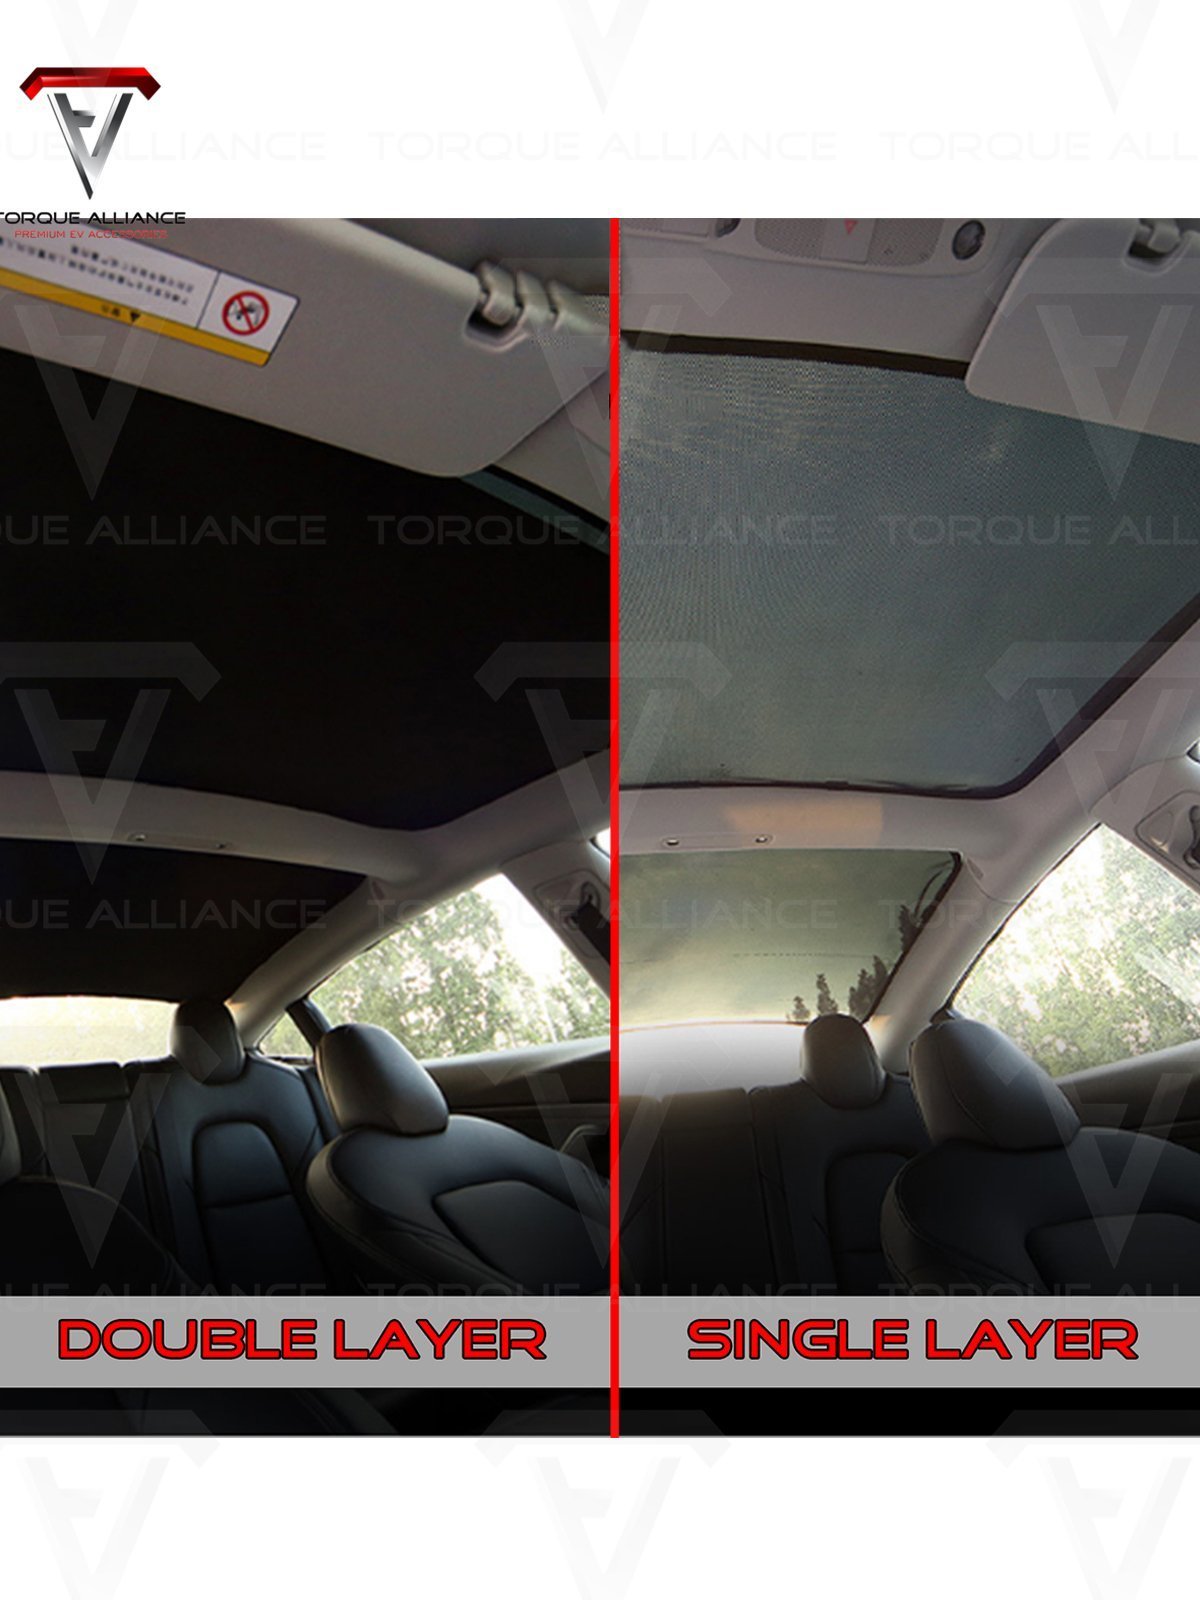 Rear Mirror + Side Windows Anti-fog Sticker Set - Torque Alliance